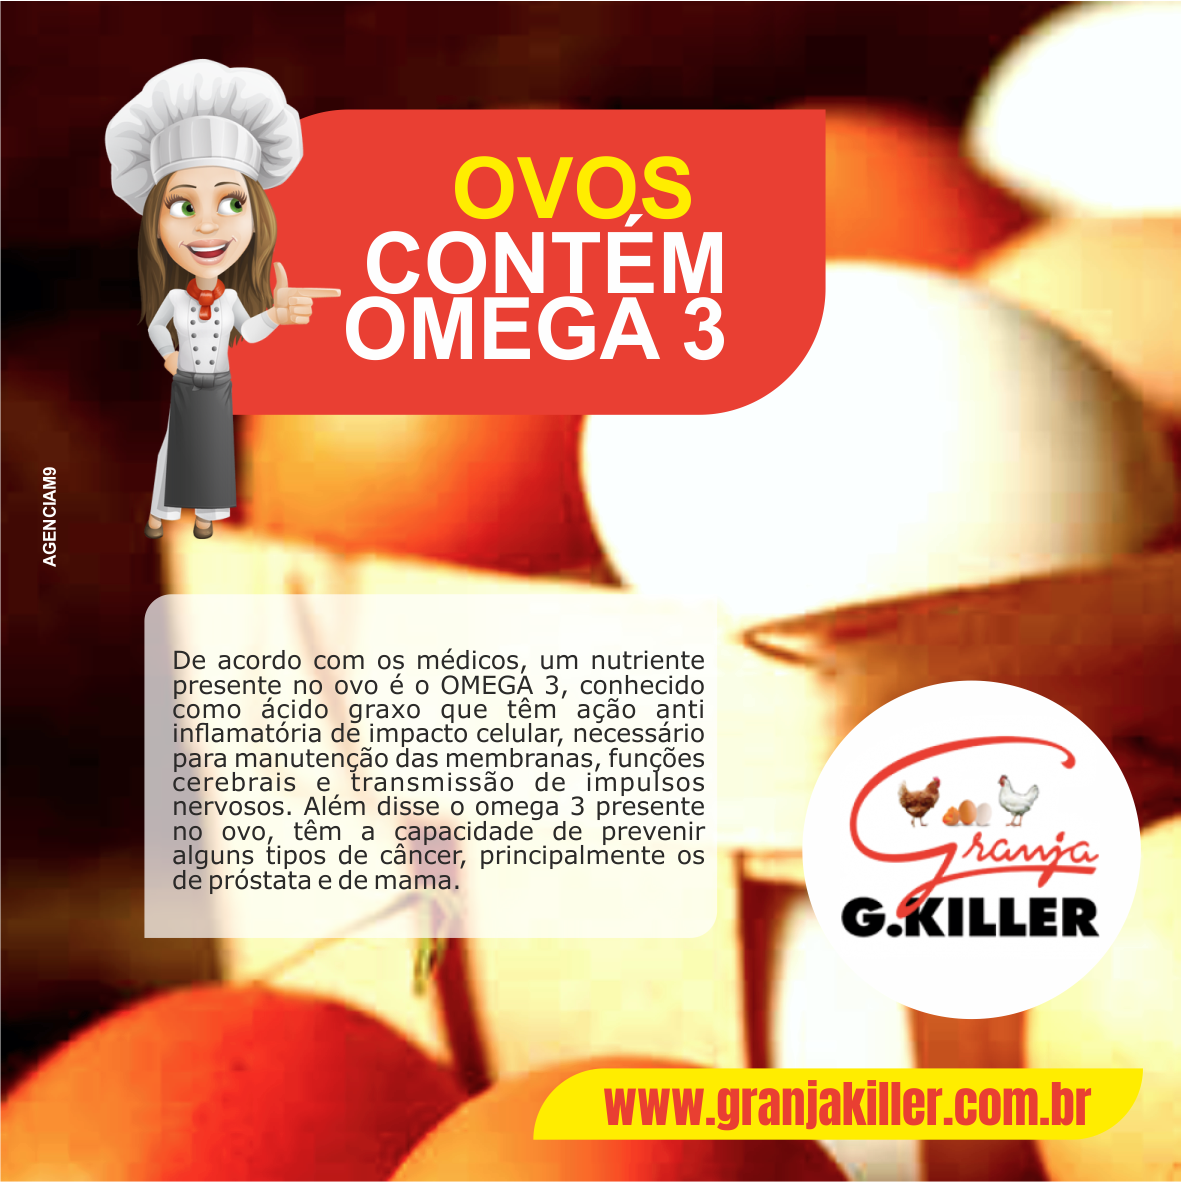 Ovos Contém Omega 3